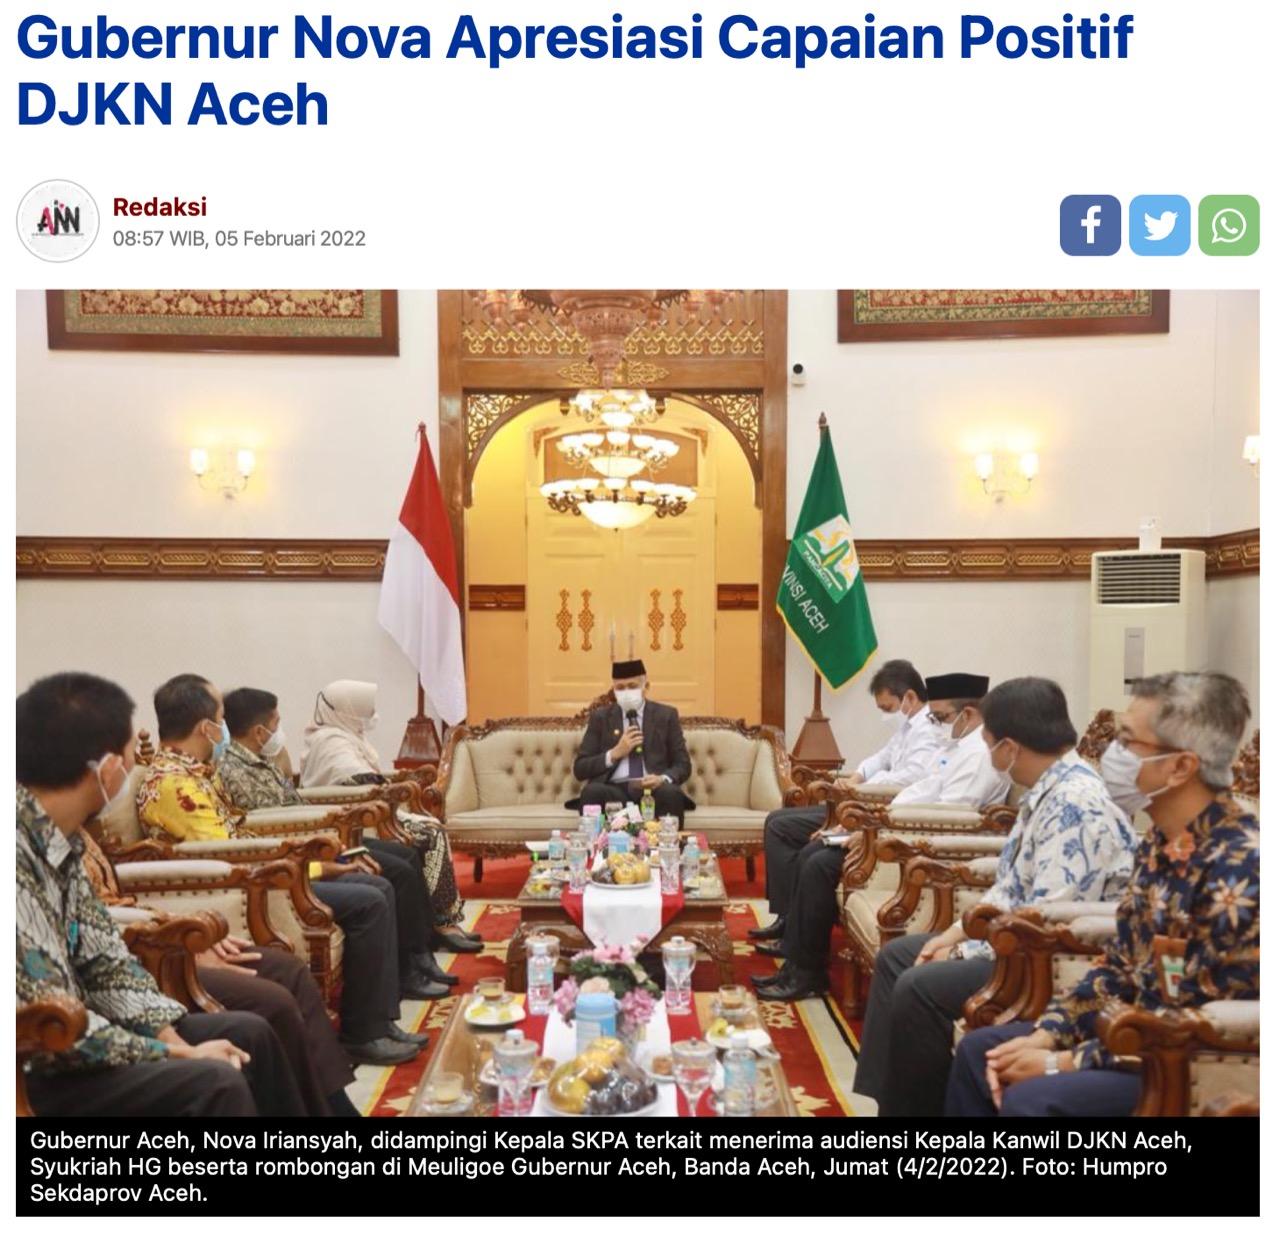 Gubernur Nova Apresiasi Capaian Positif DJKN Aceh